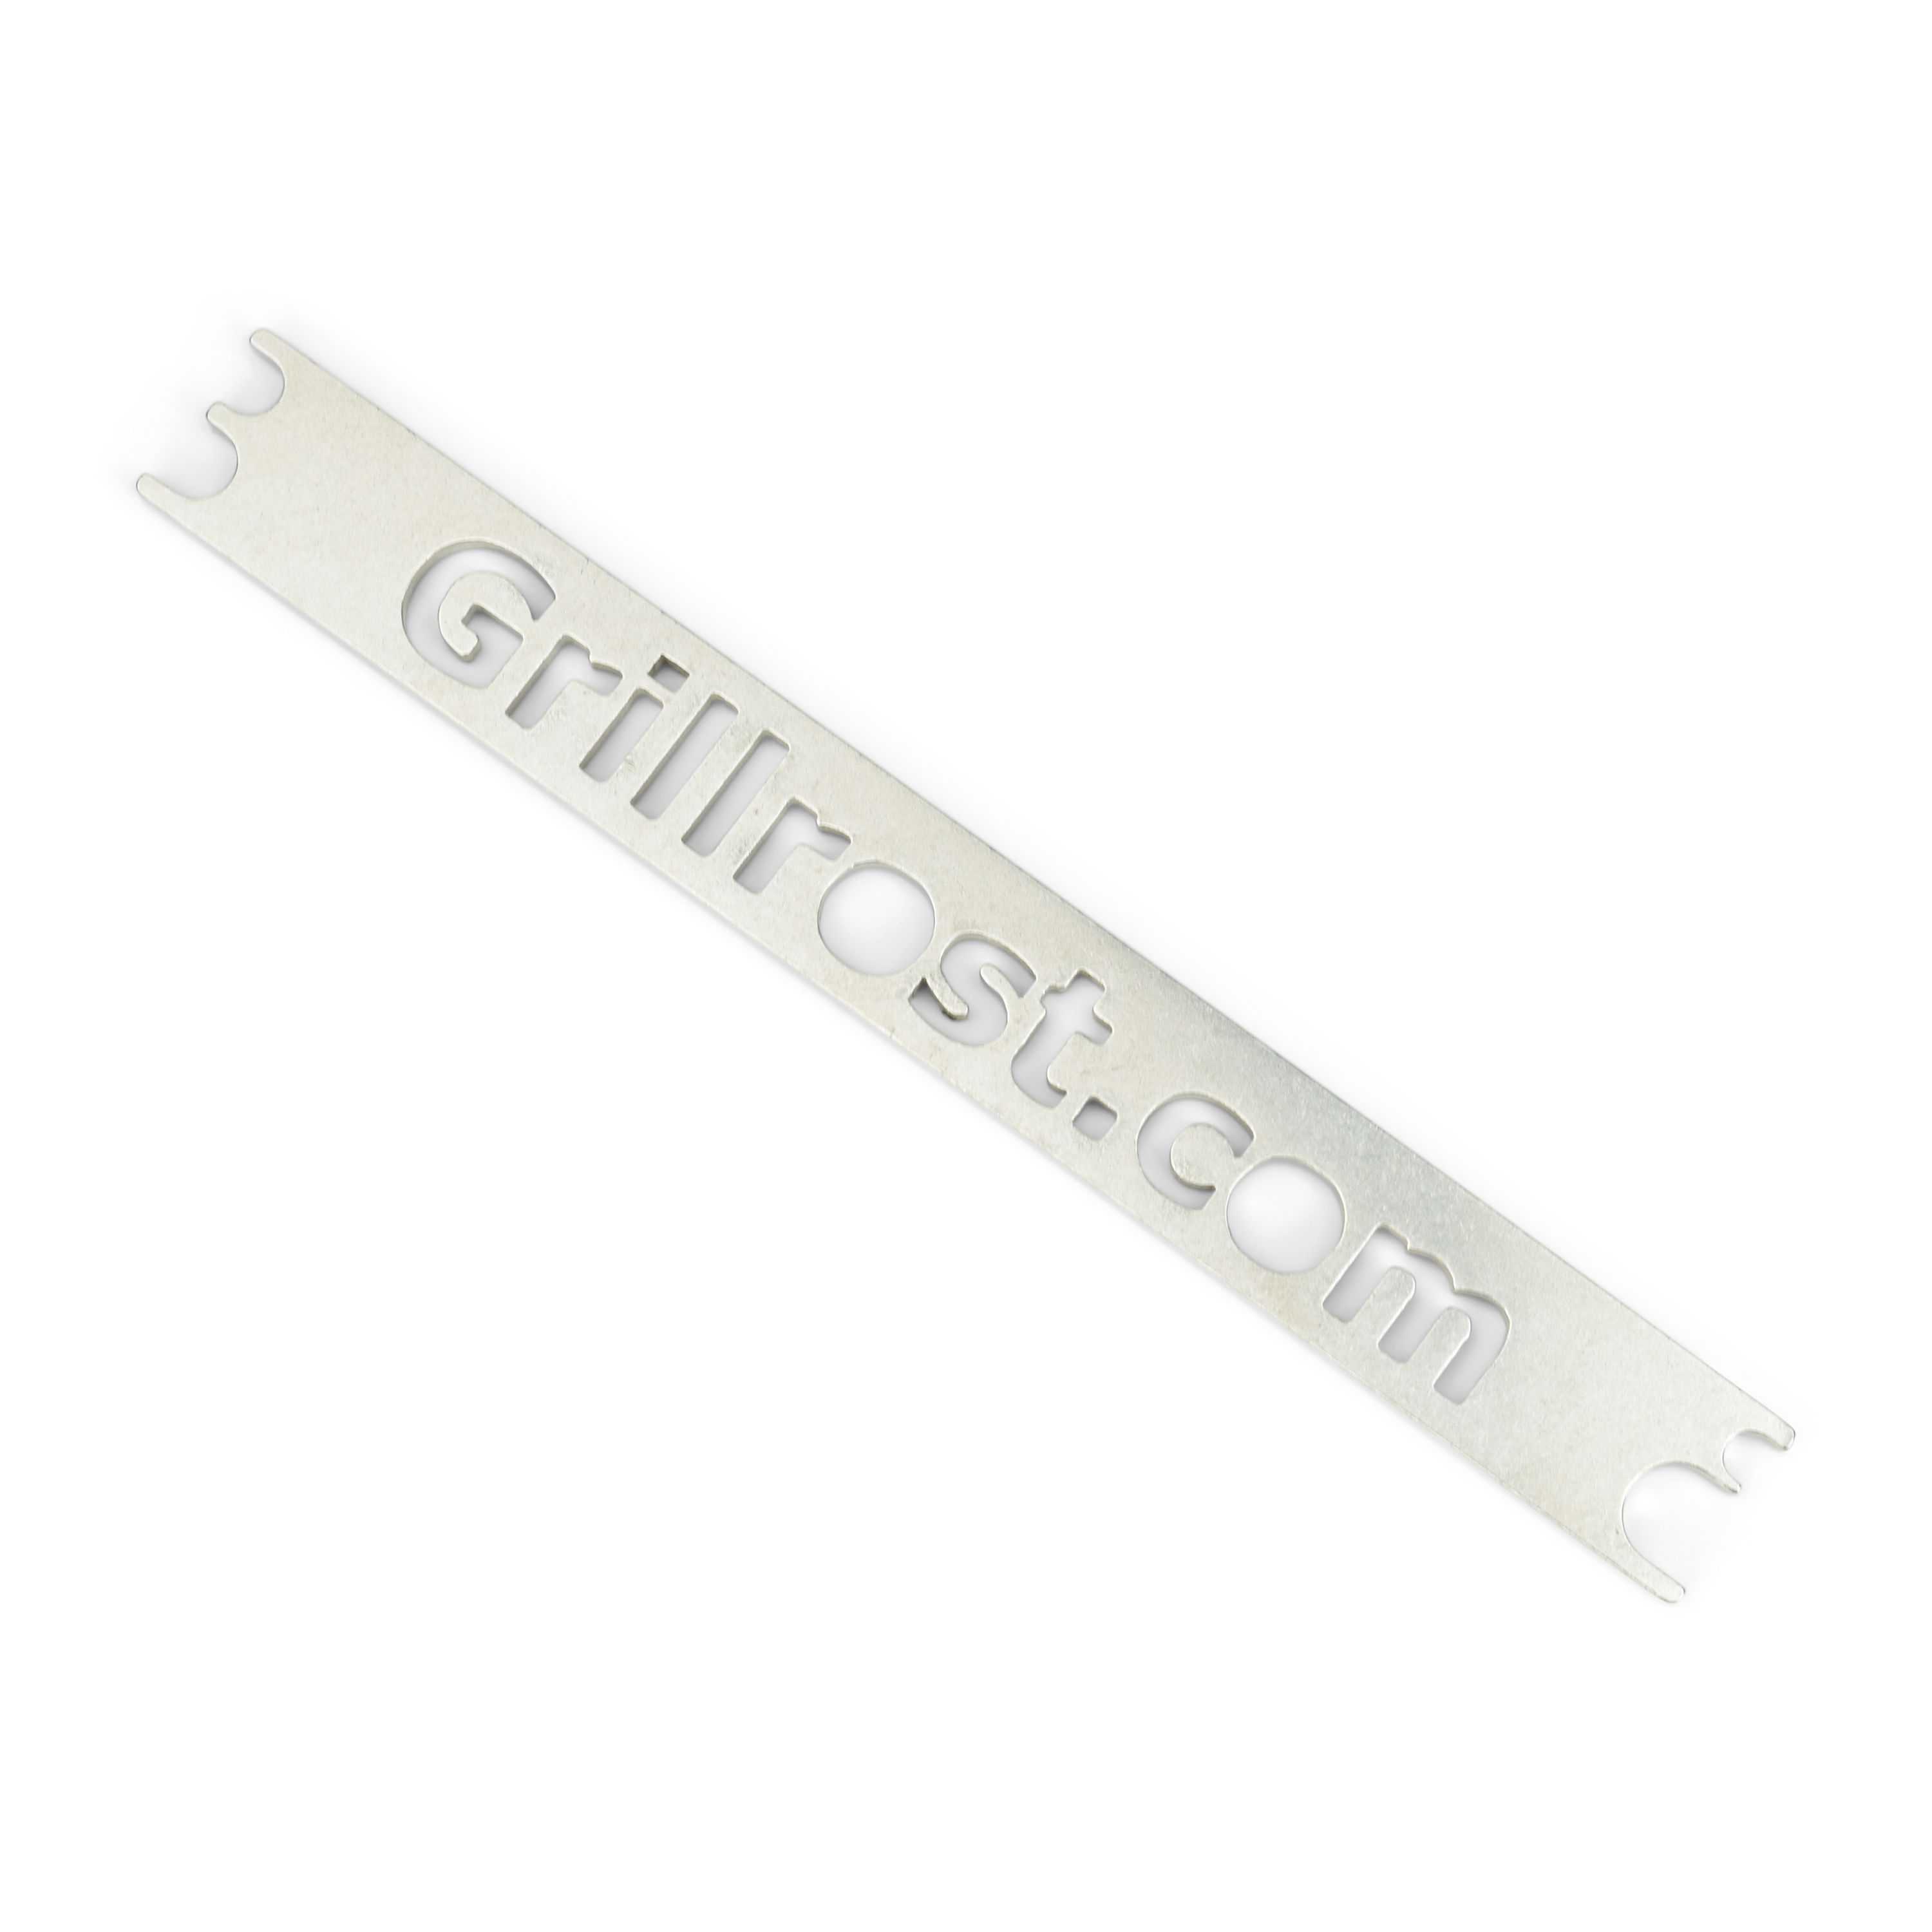 The Grillrost.com grill scraper